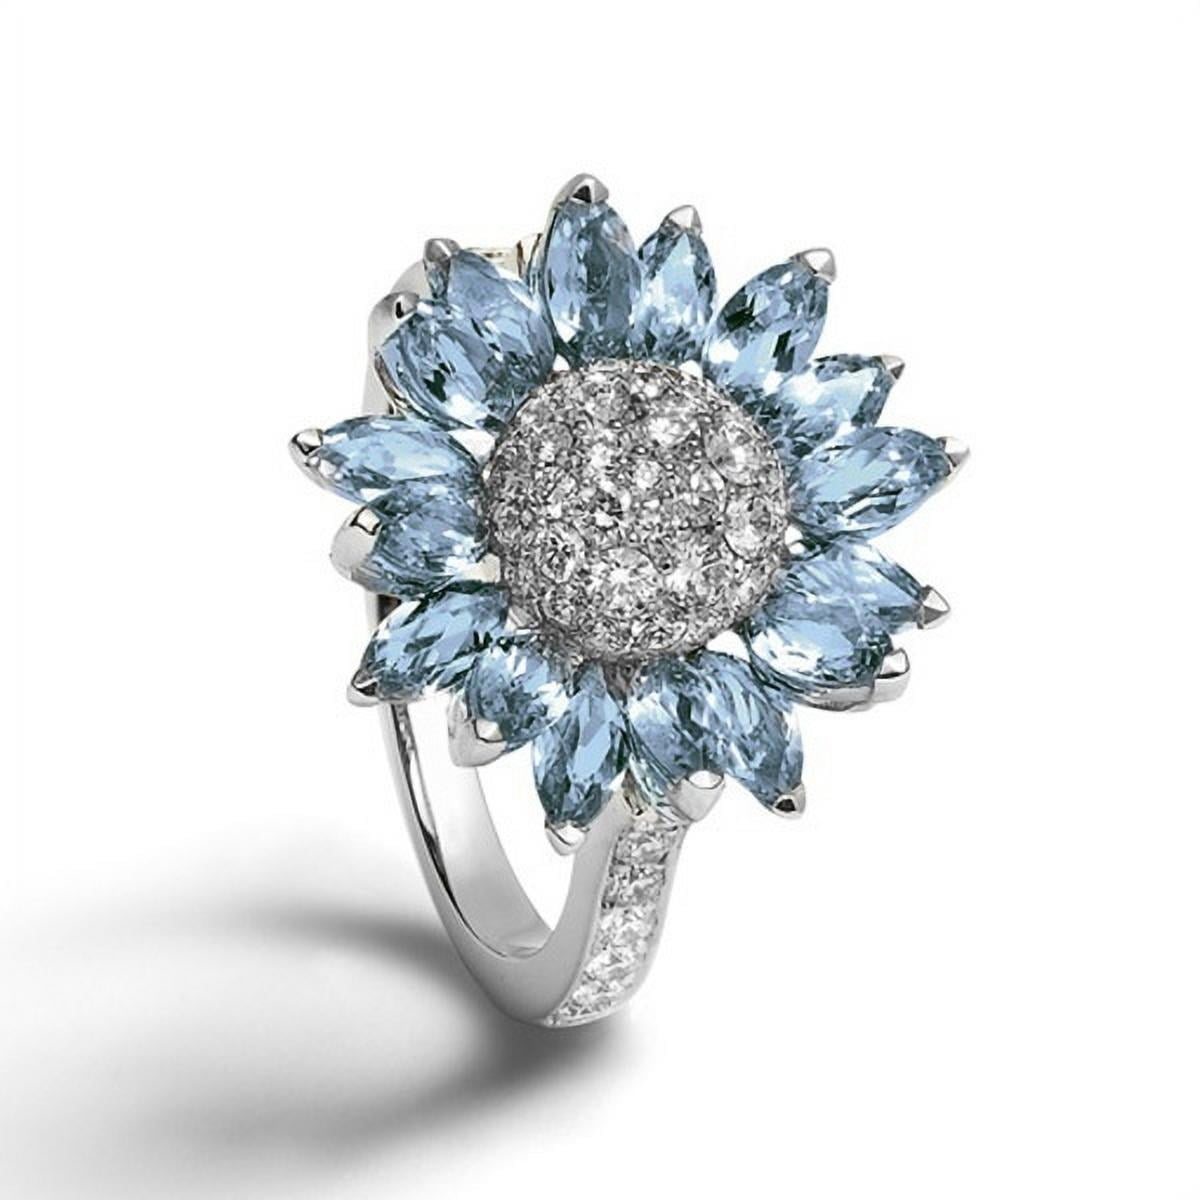 Aquamarine Blue 925 Silver White CZ Band Women's Wedding Jewelry Ring Size 6-10 